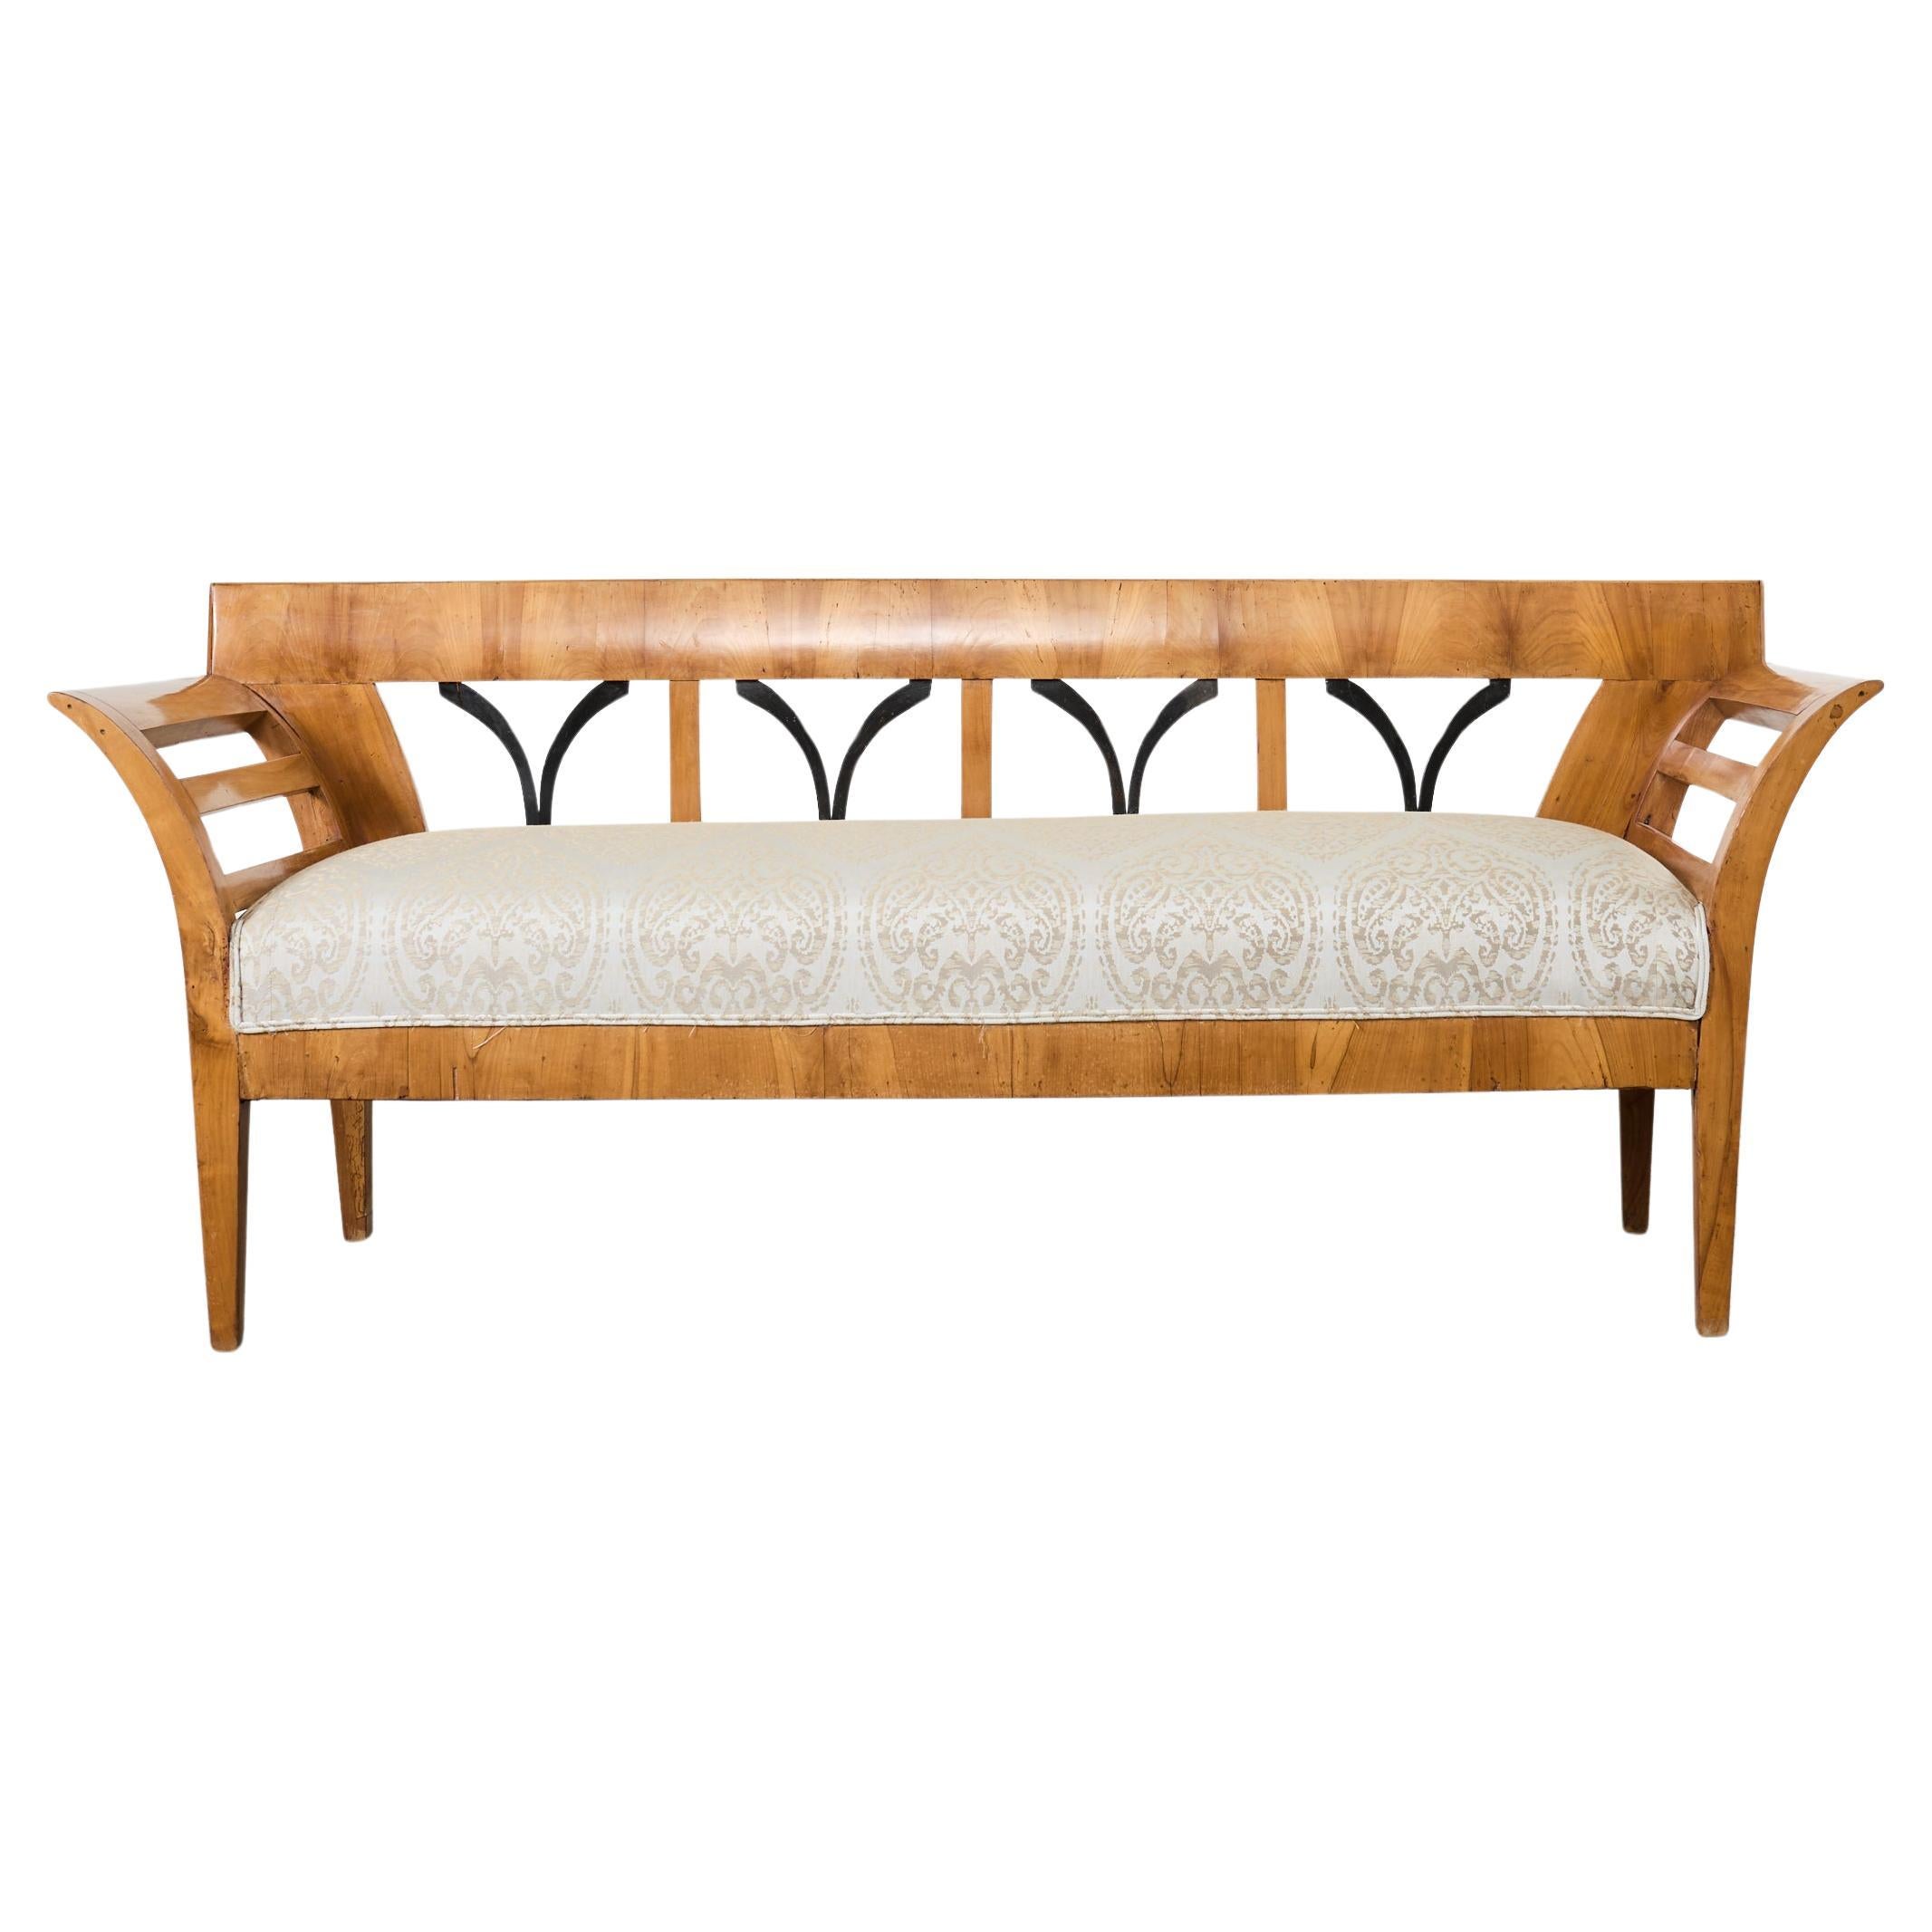 19th Century Swedish Neoclassical Style Birch Veneer Bench Seat For Sale